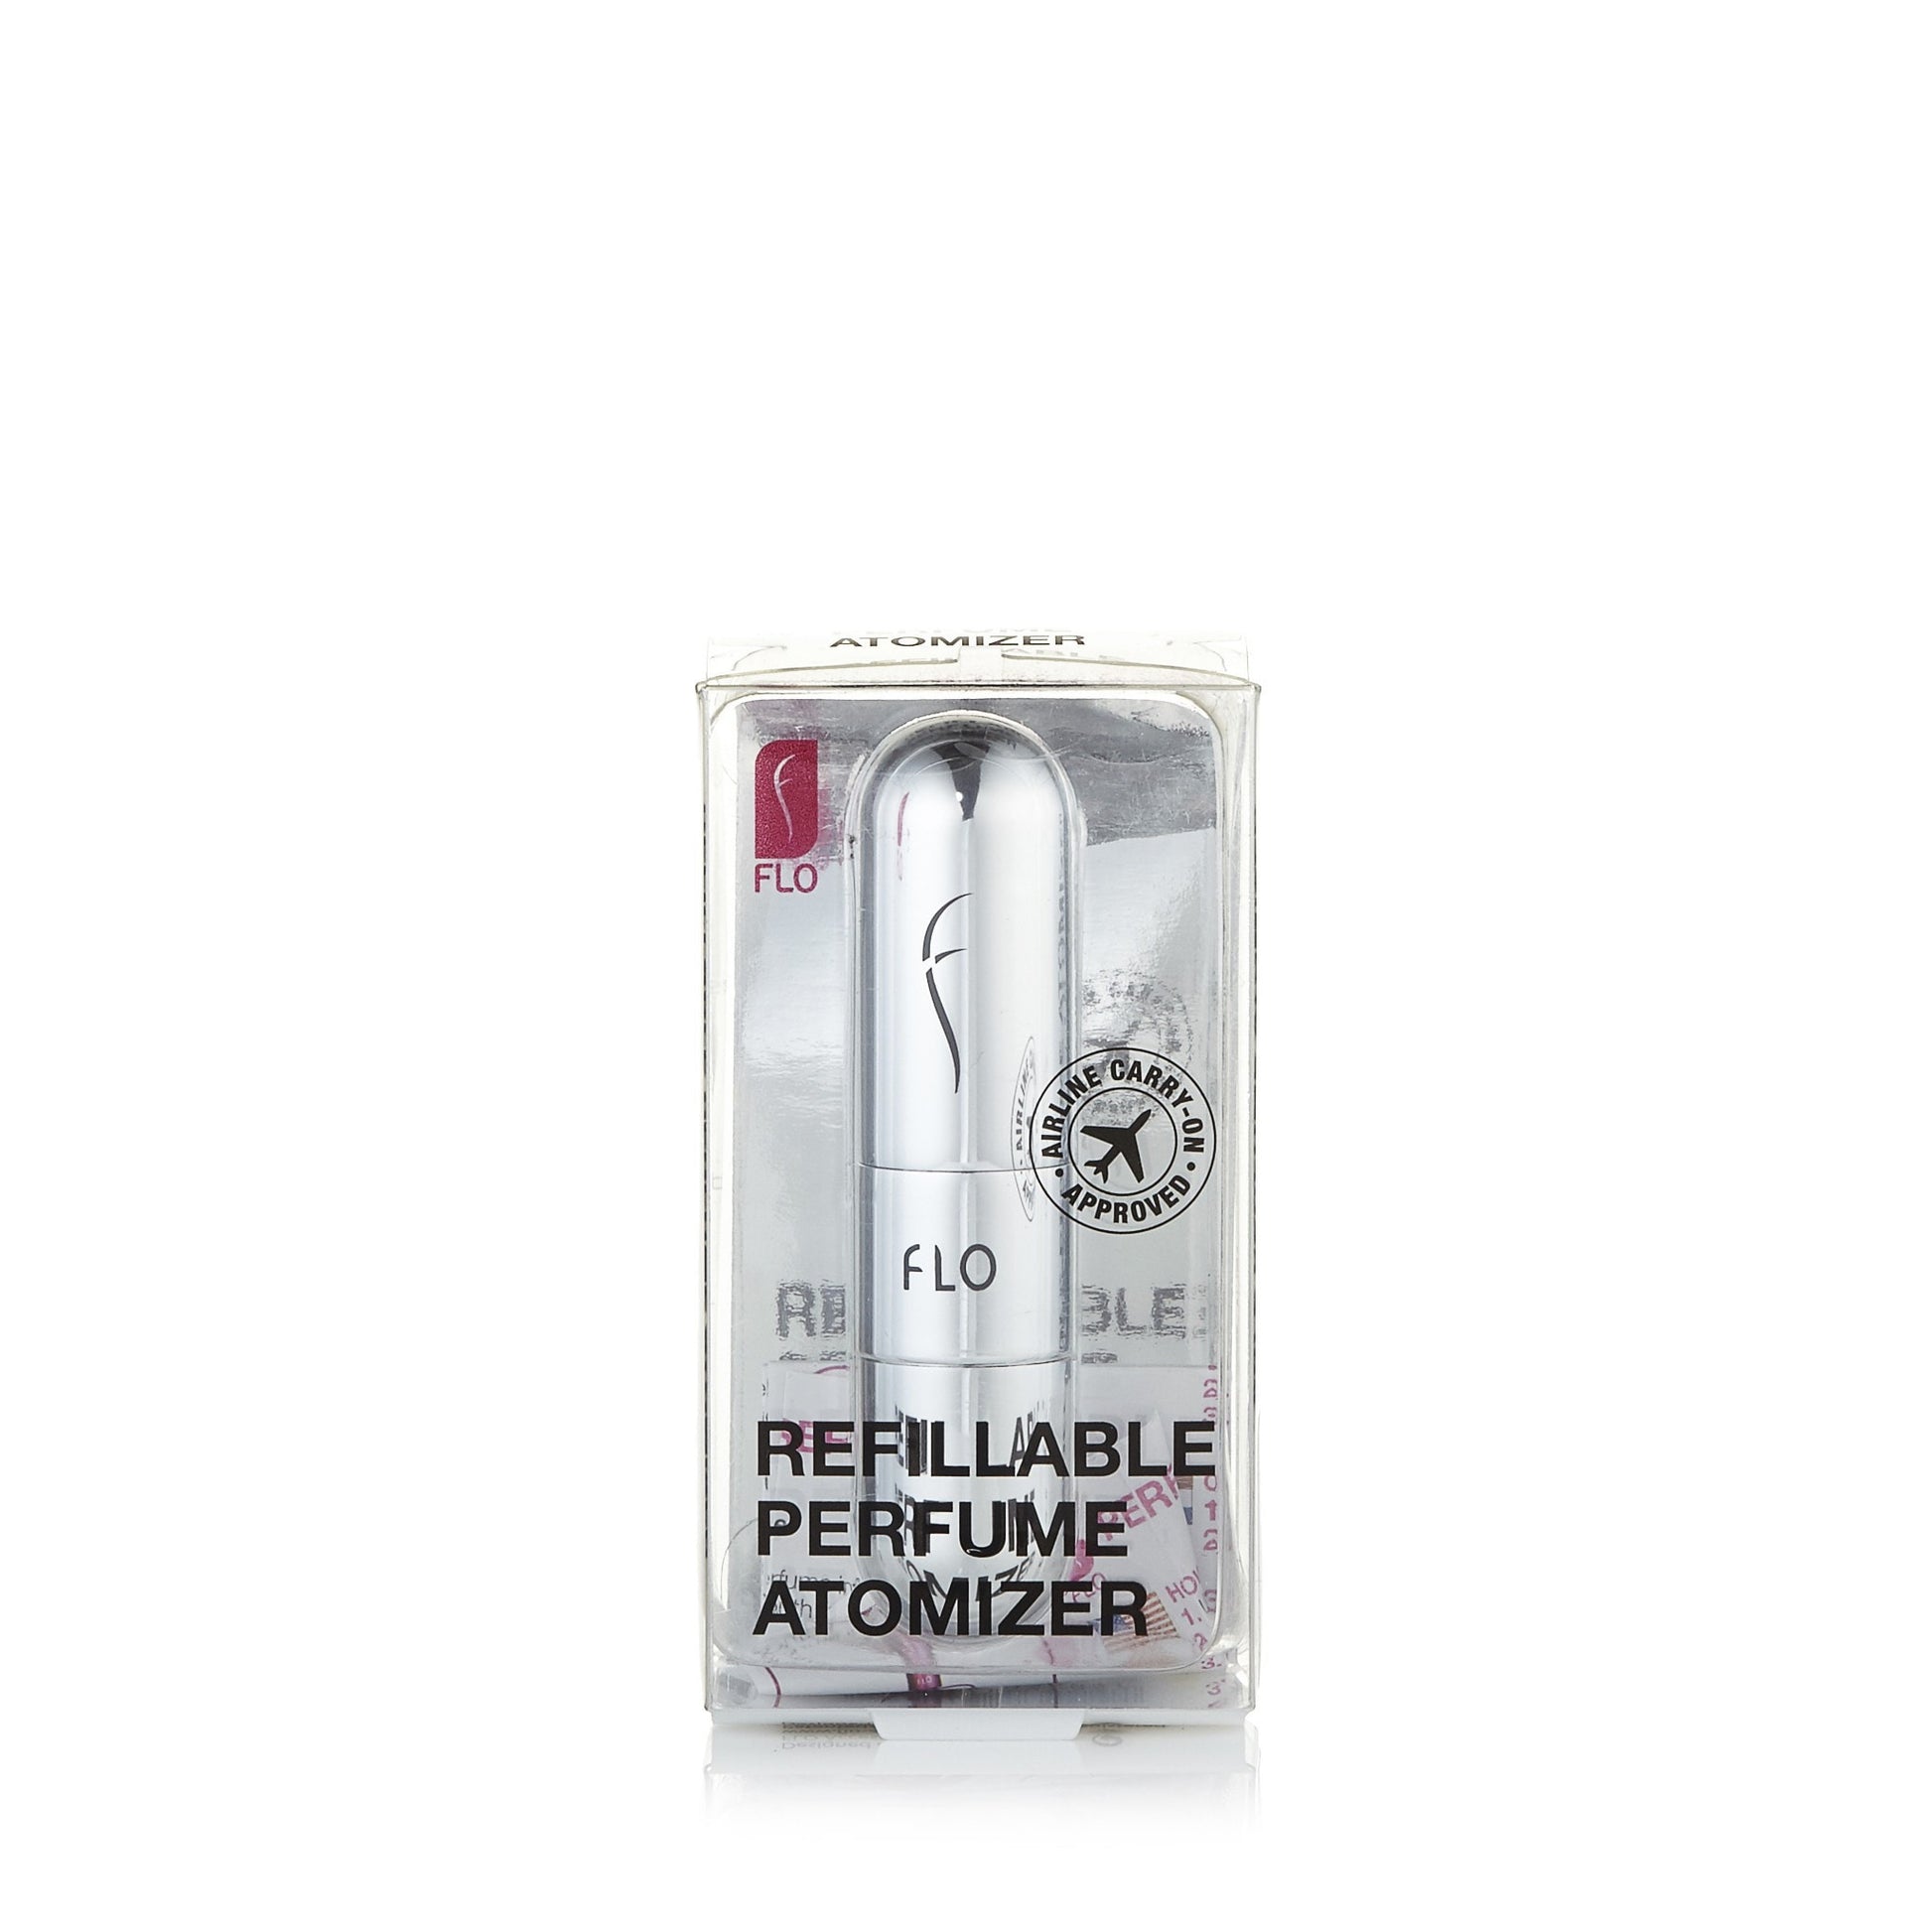 Refillable Perfume Atomizer by Flo Silver Click to open in modal